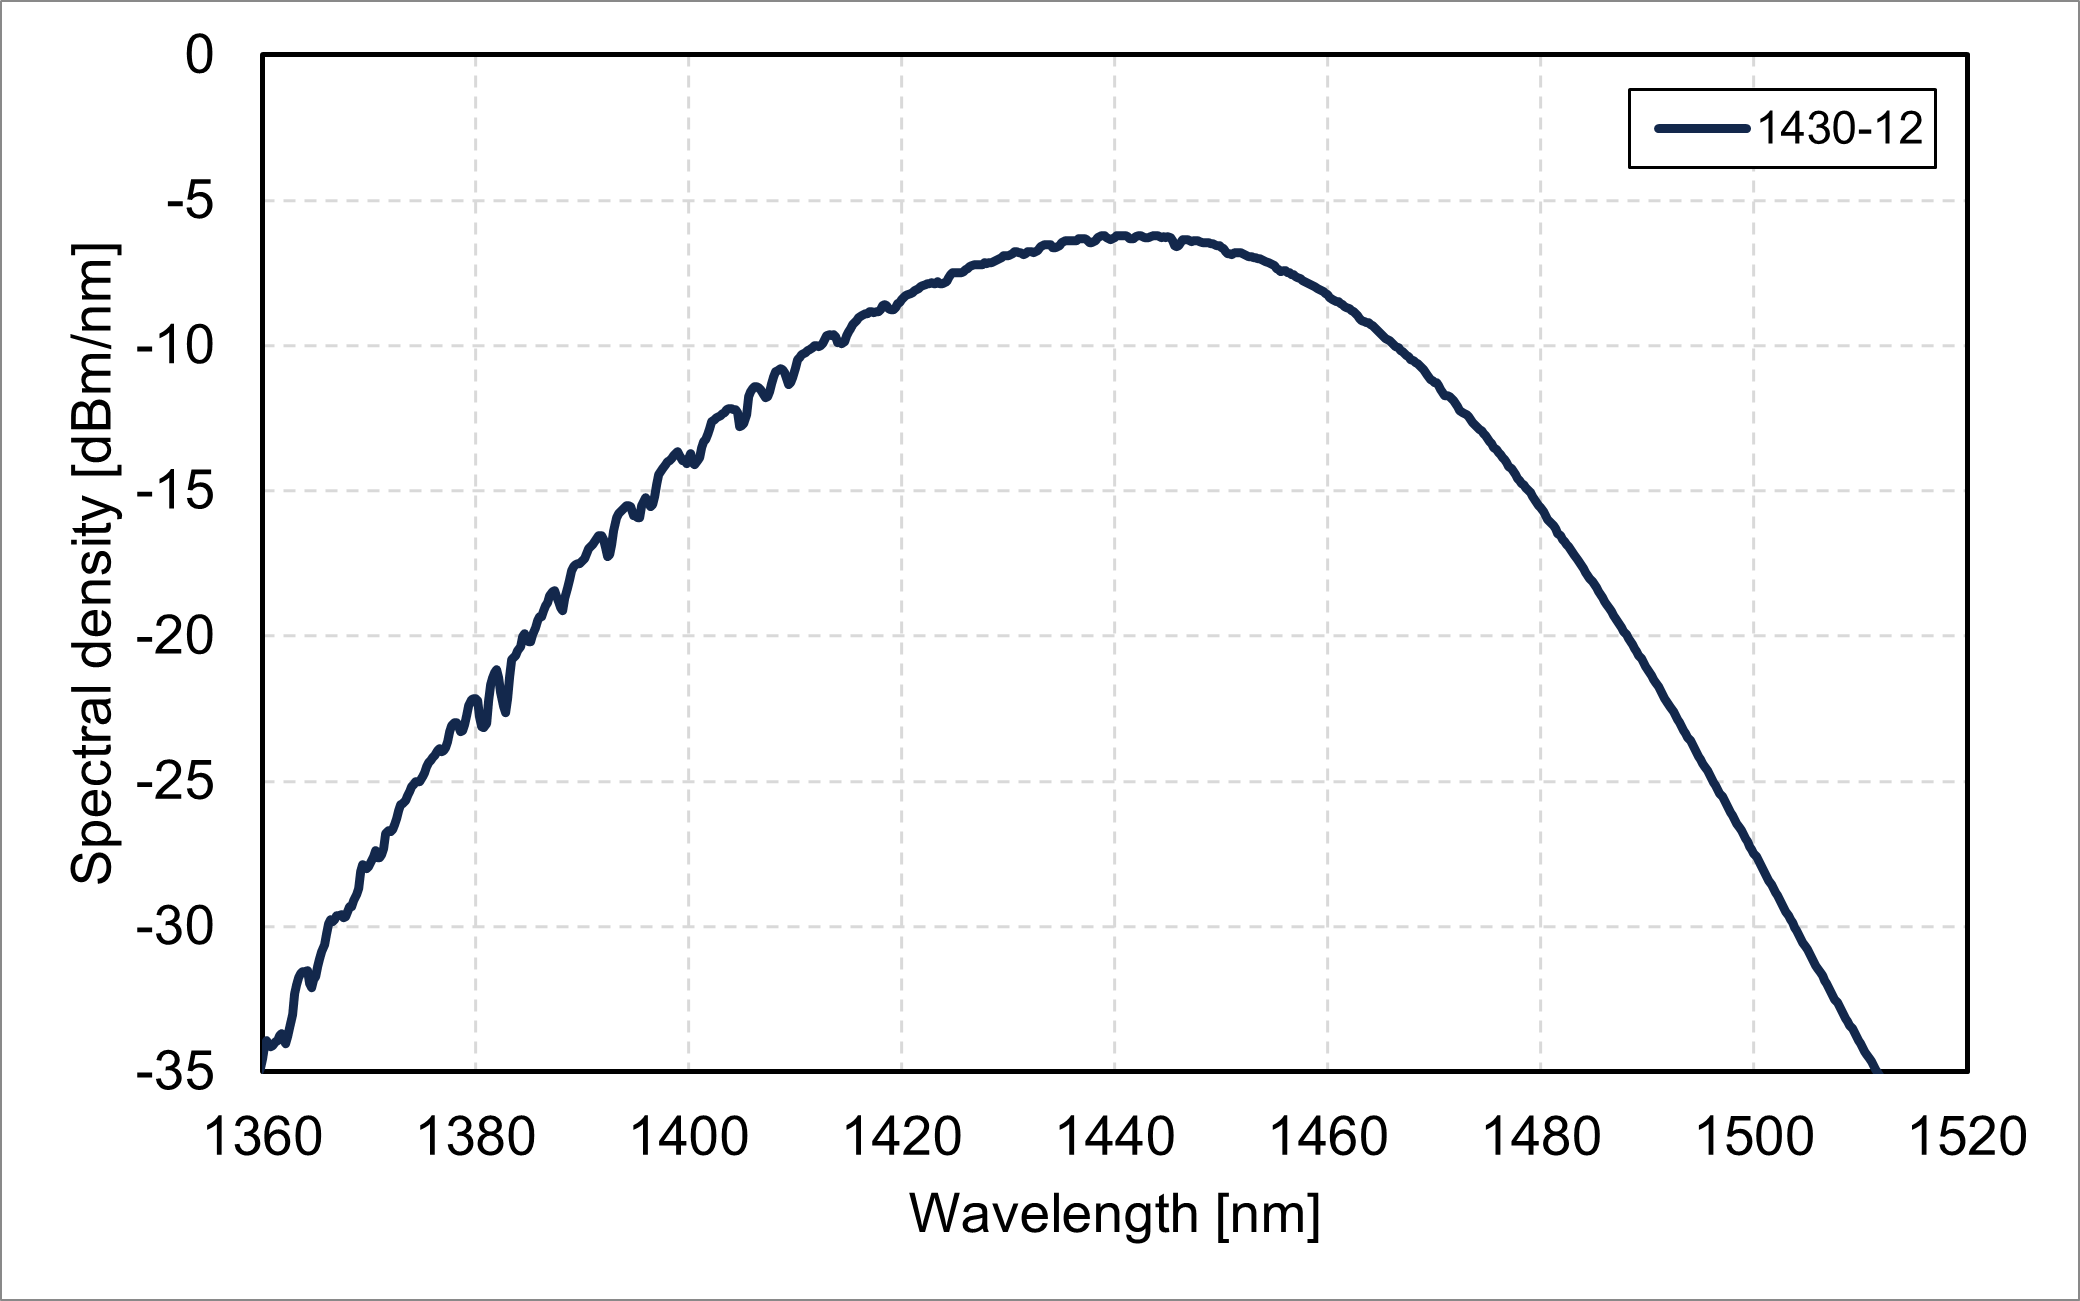 Spectral density vs. wavelength (1430-12)